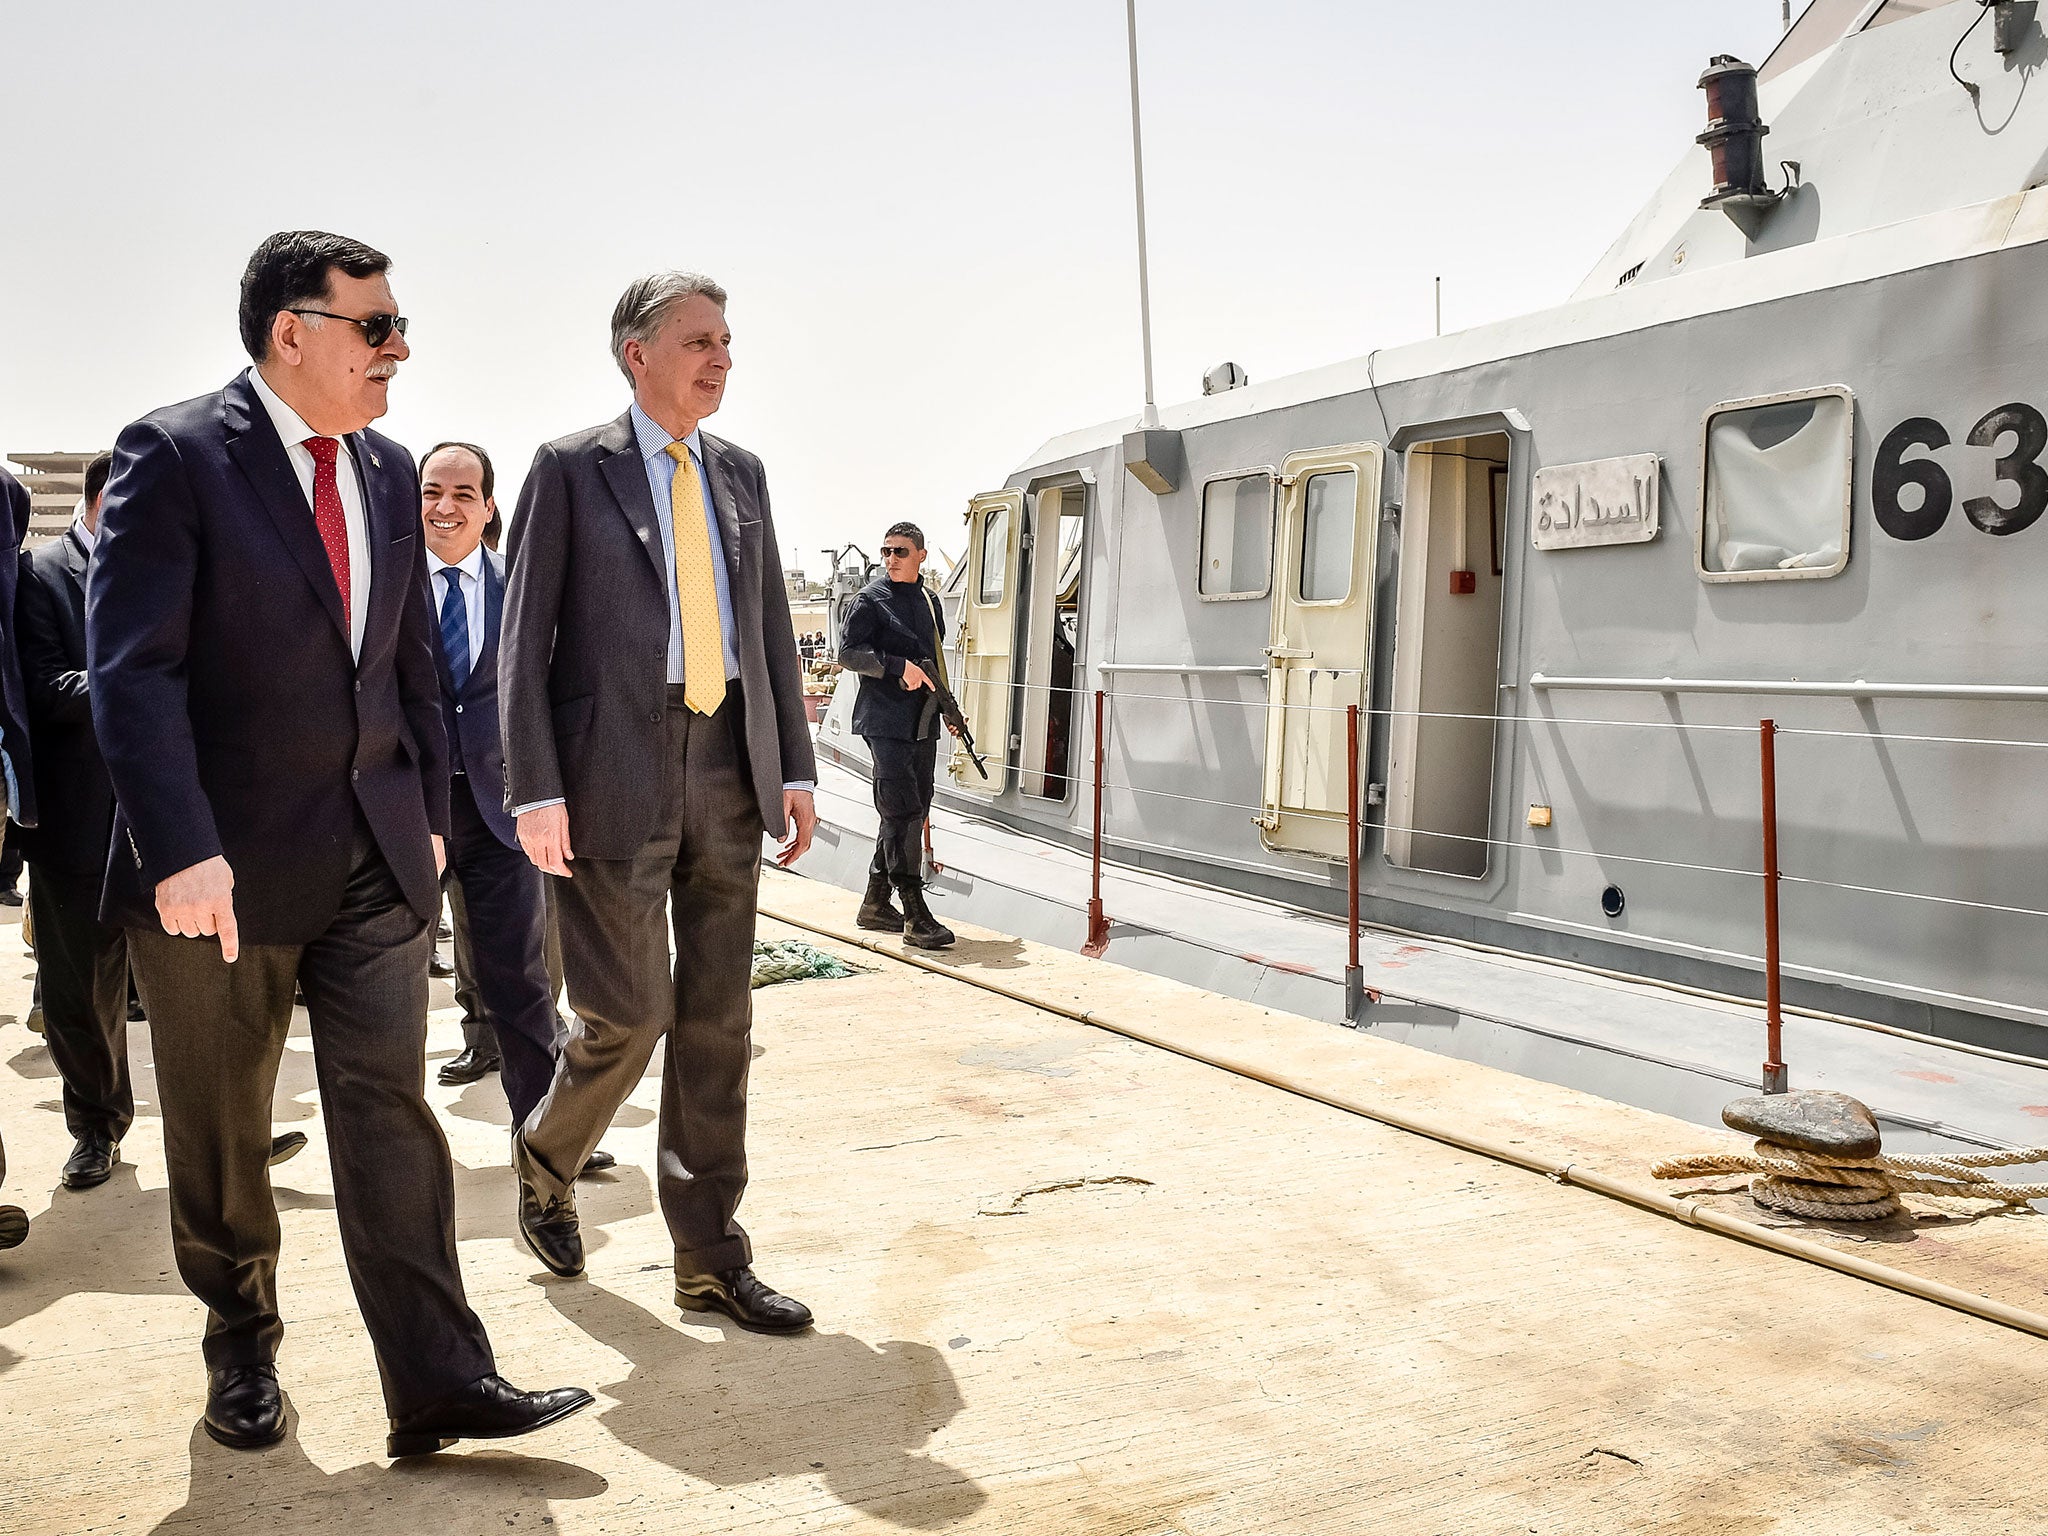 Foreign Secretary Philip Hammond, with Libya's Prime Minister-designate Fayez Sarraj, toured a naval base during his visit to Tripoli